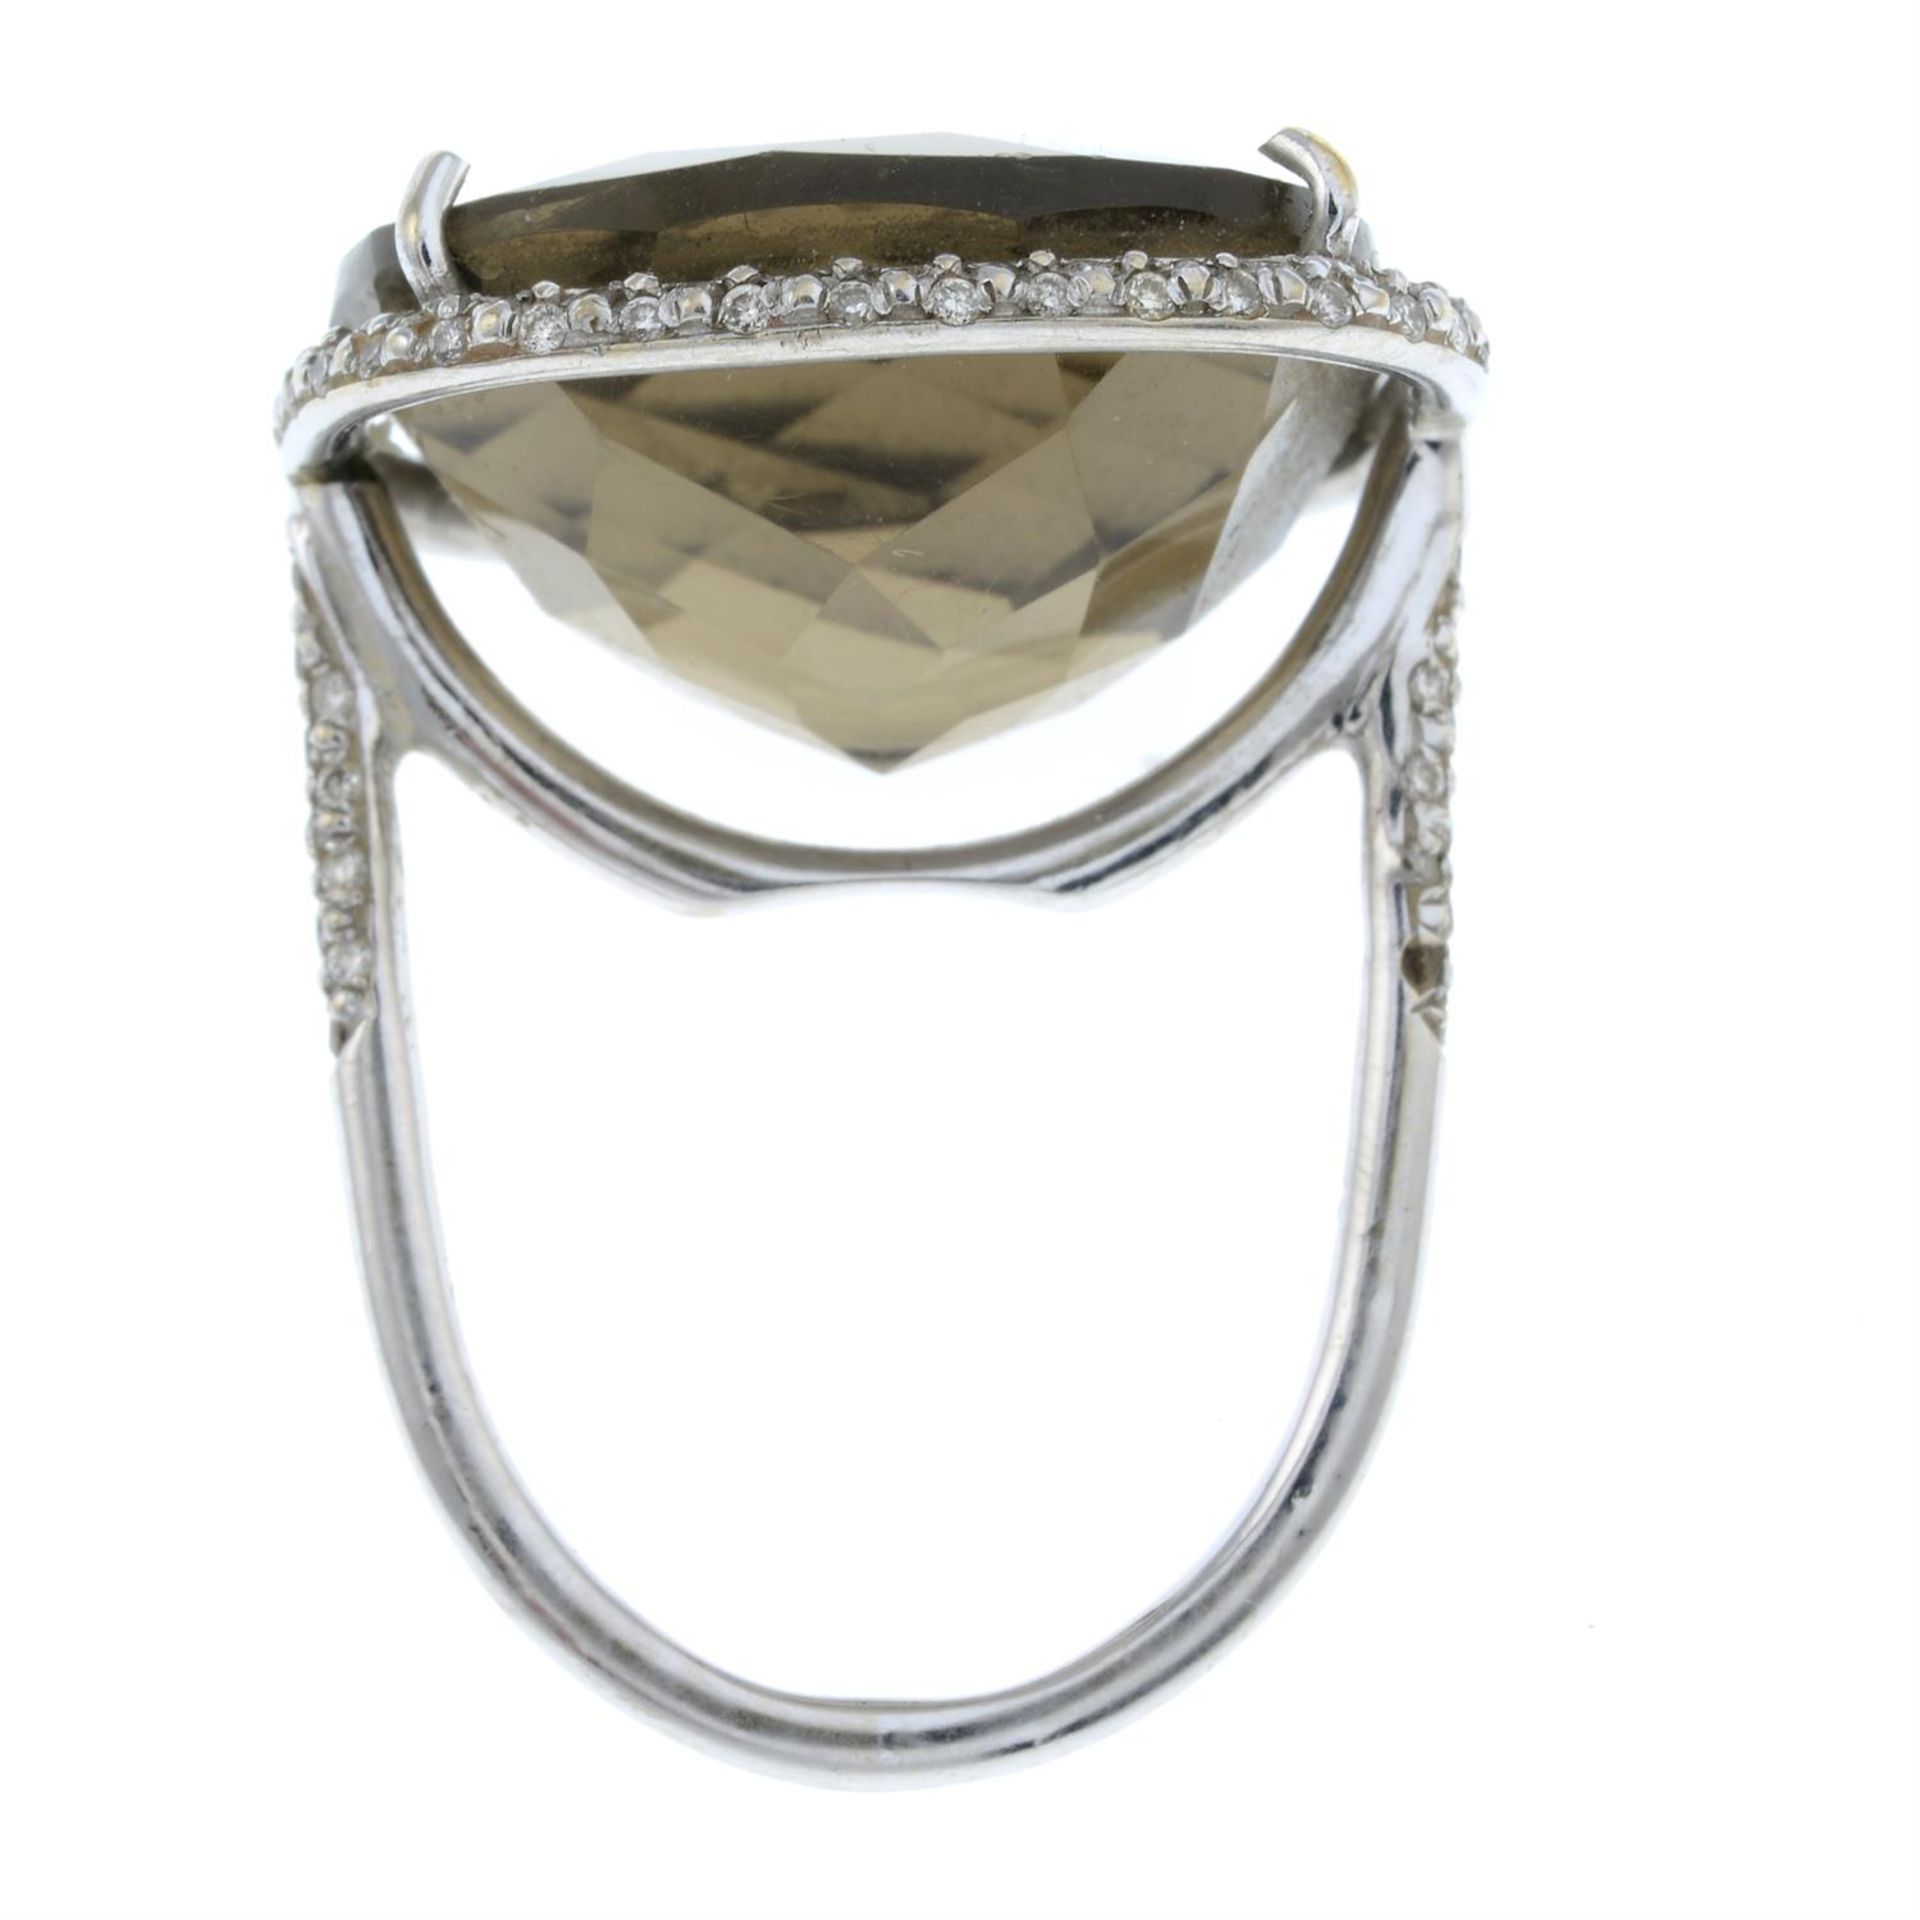 A smoky quartz and brilliant-cut diamond dress ring. - Image 2 of 2